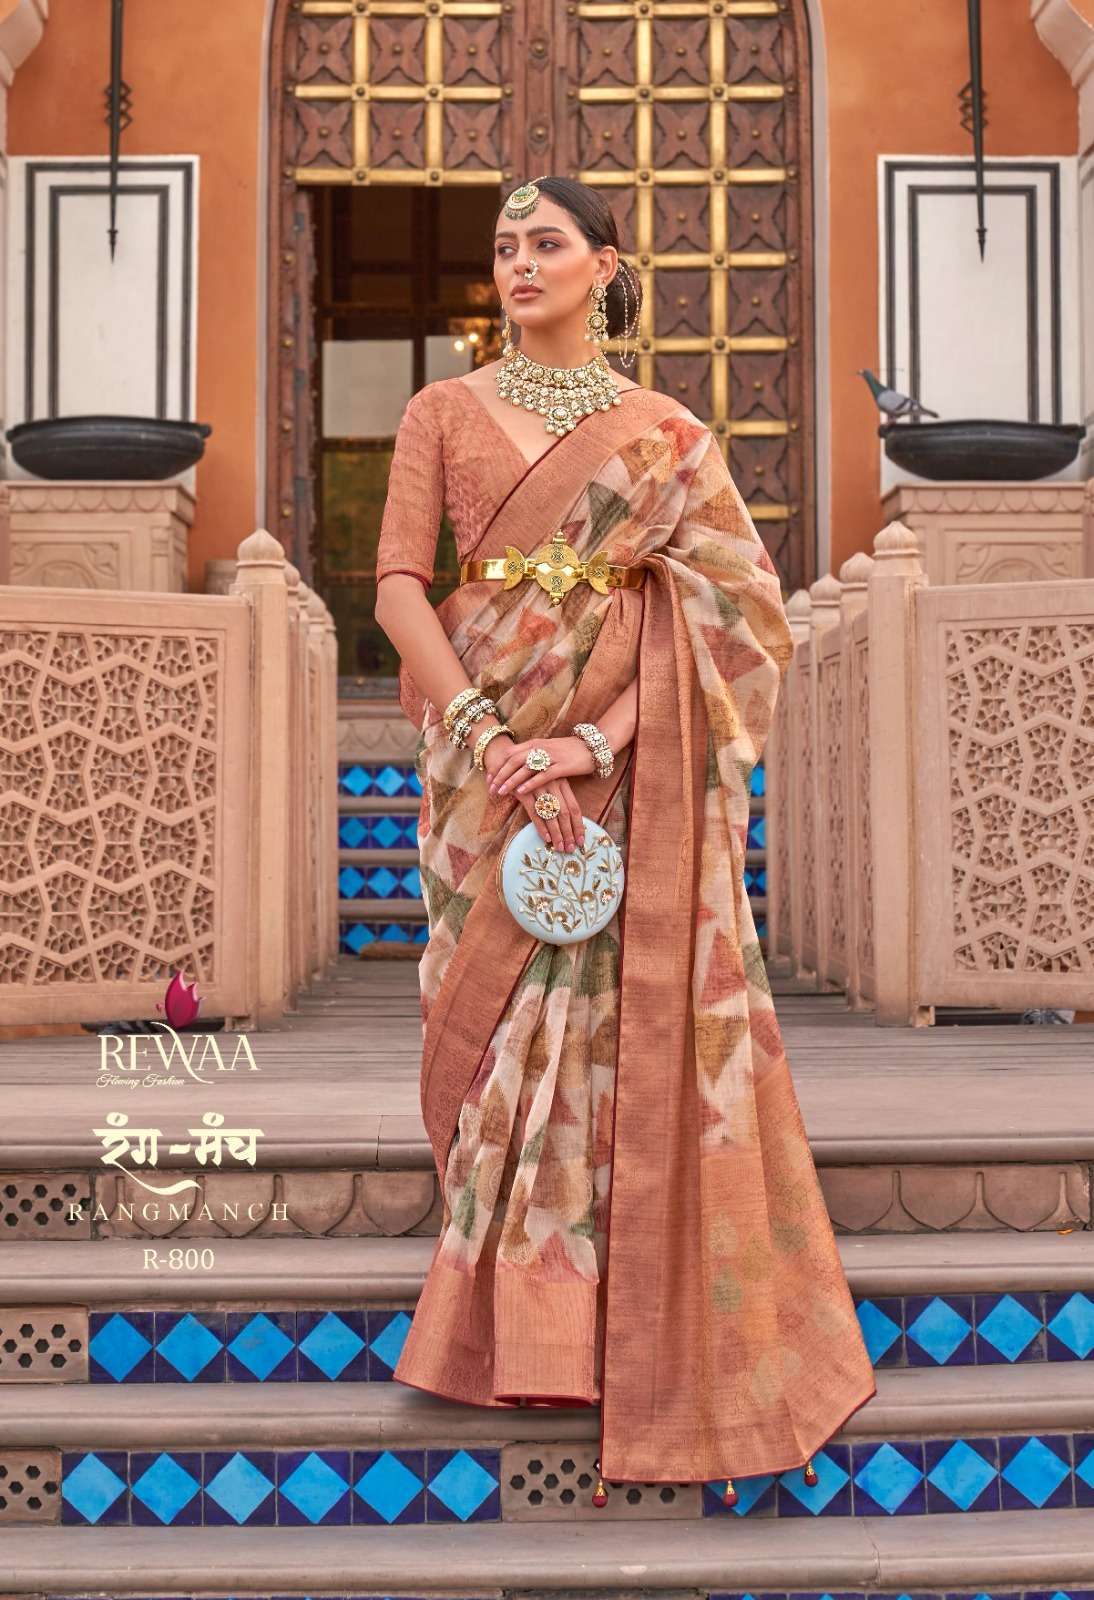 rewaa fashion rangmanch organza with digital printed saree collection 2023 07 28 16 37 31